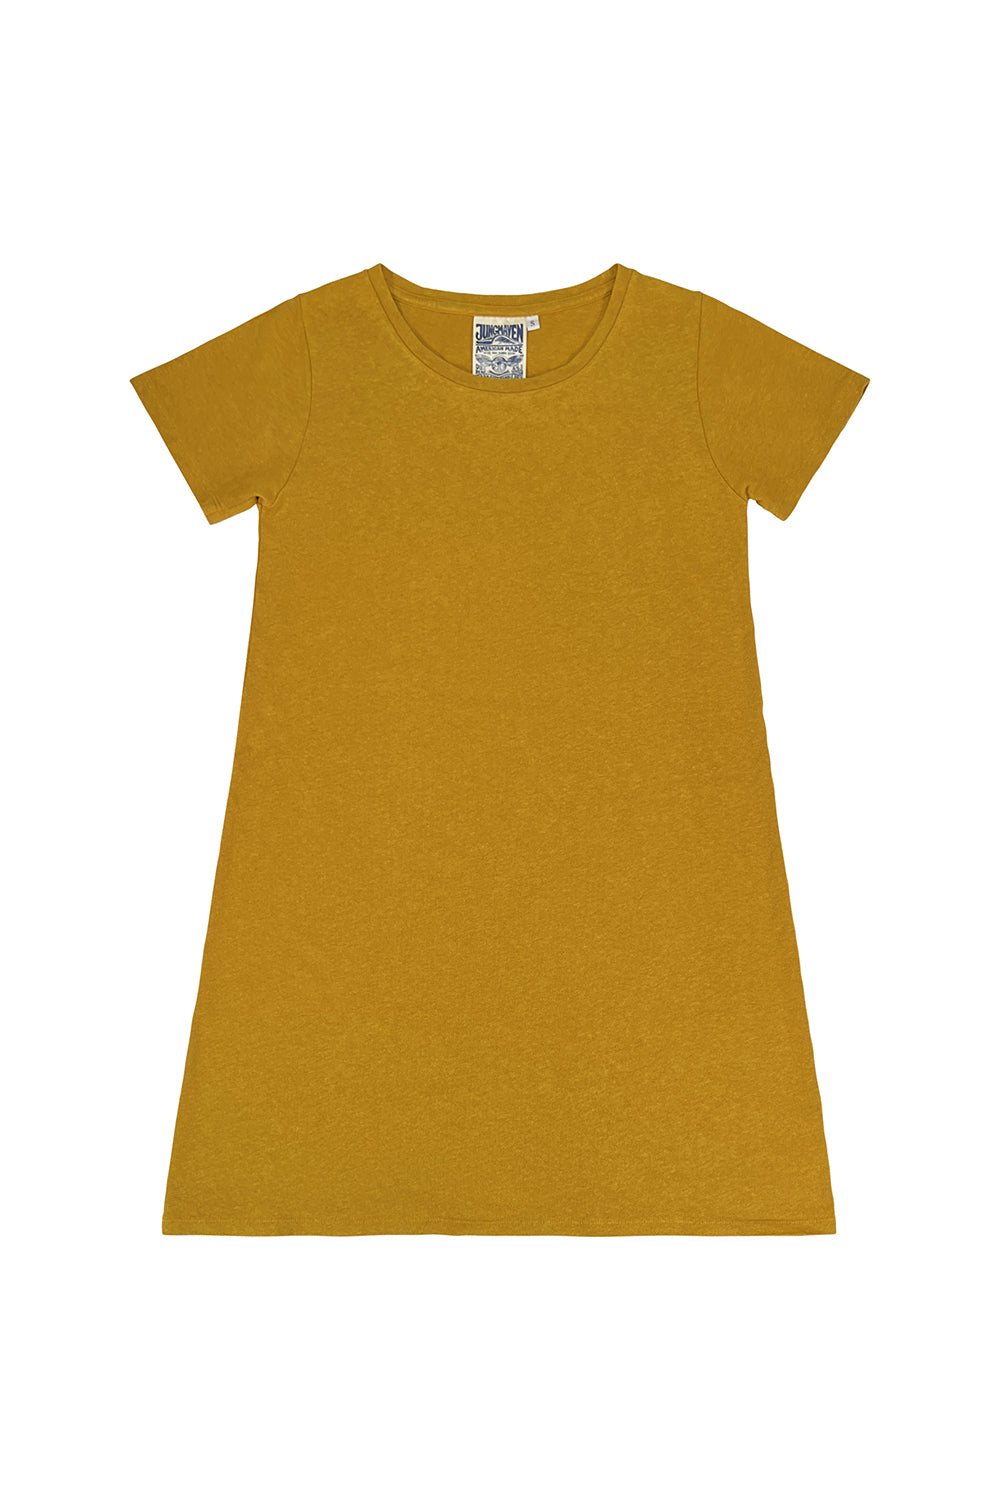 Rae Line Dress | Jungmaven Hemp Clothing & Accessories / Color: Spicy Mustard